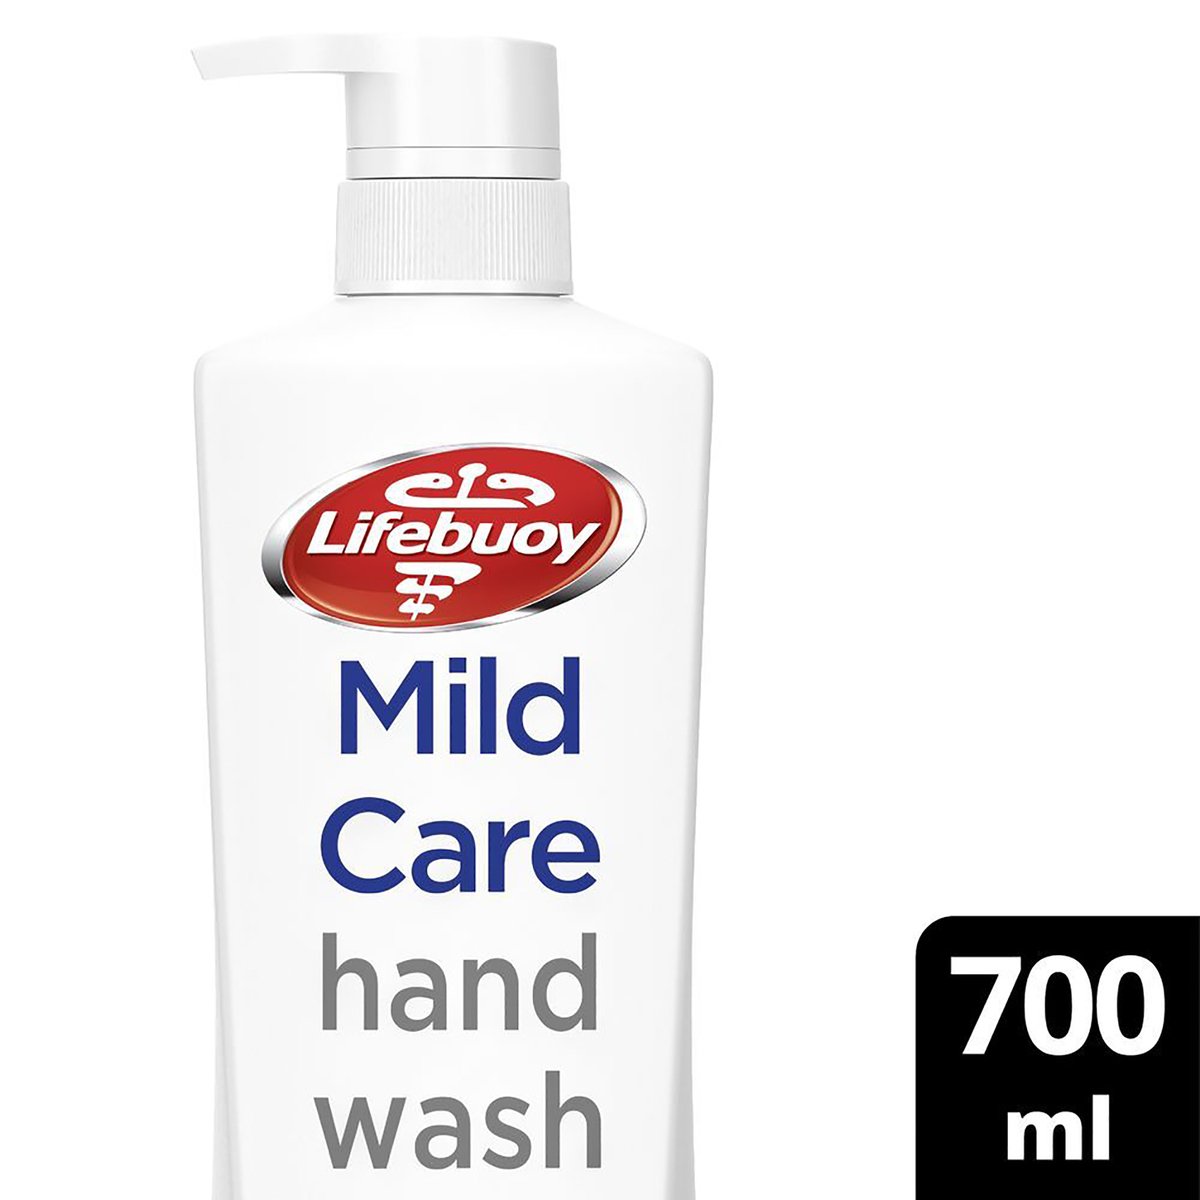 Lifebuoy Mild Care Germ Protection Handwash 700ml